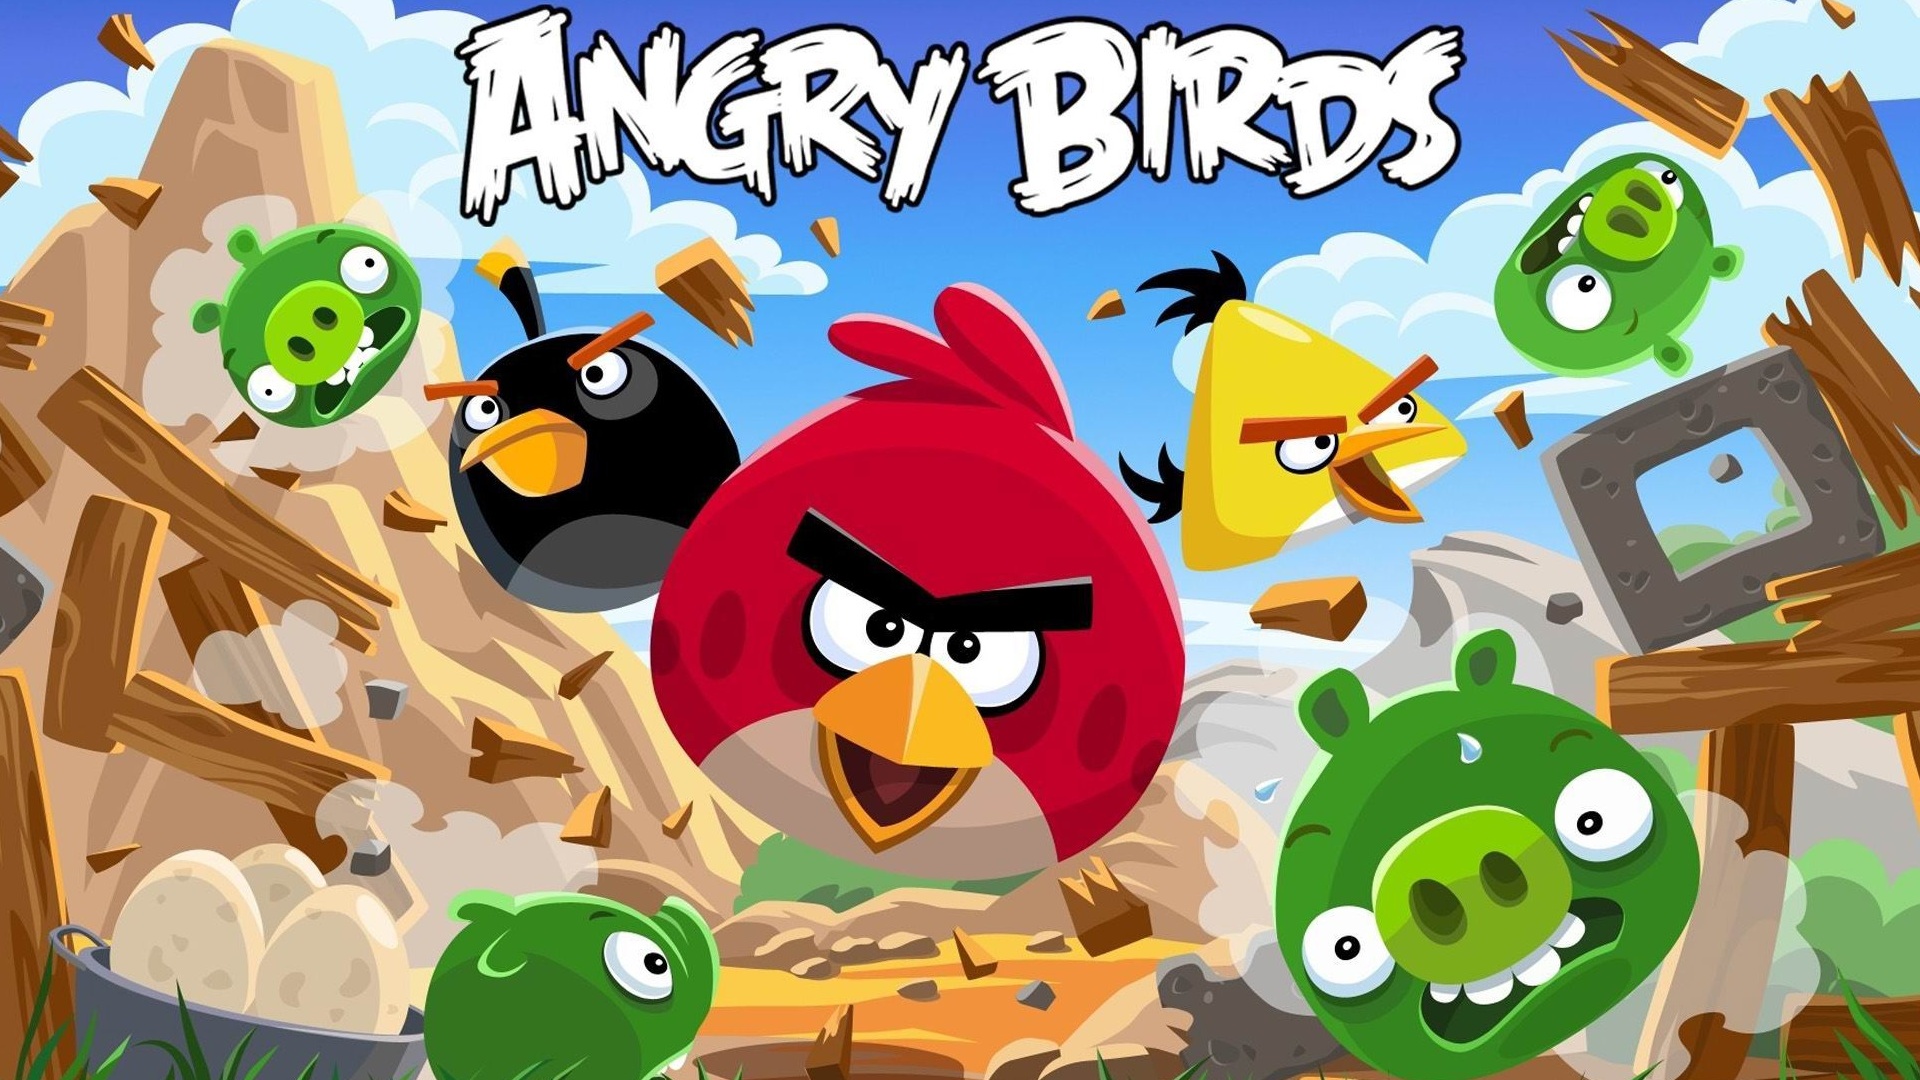 Descargar fondos de escritorio de Angry Birds Trilogy HD